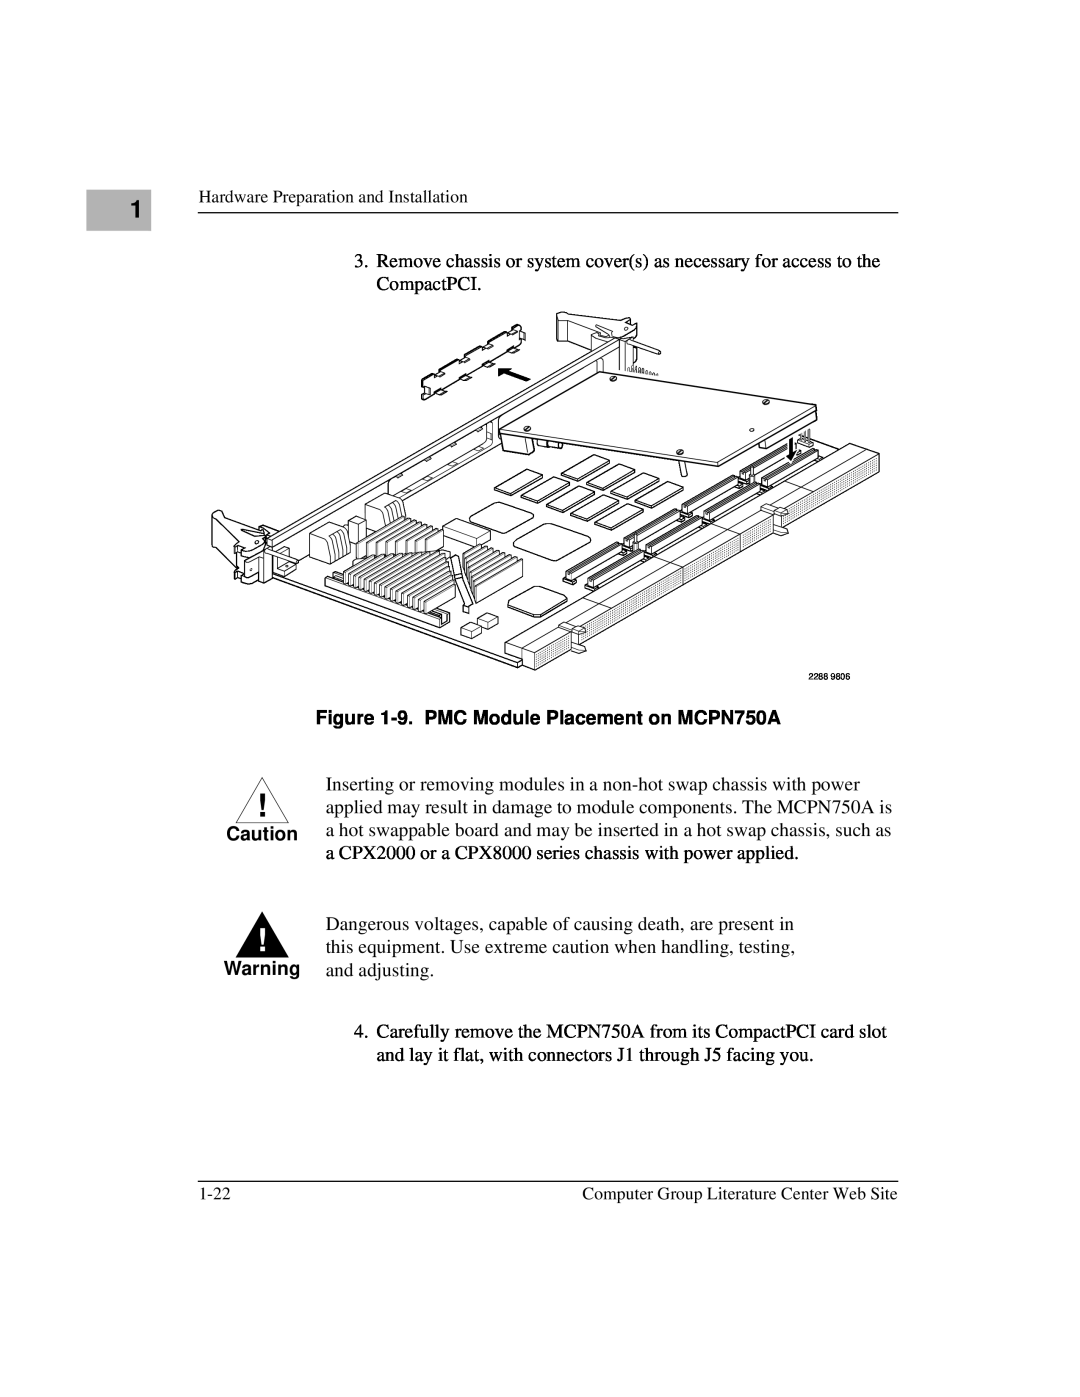 Motorola IH5 manual 9. PMC Module Placement on MCPN750A 